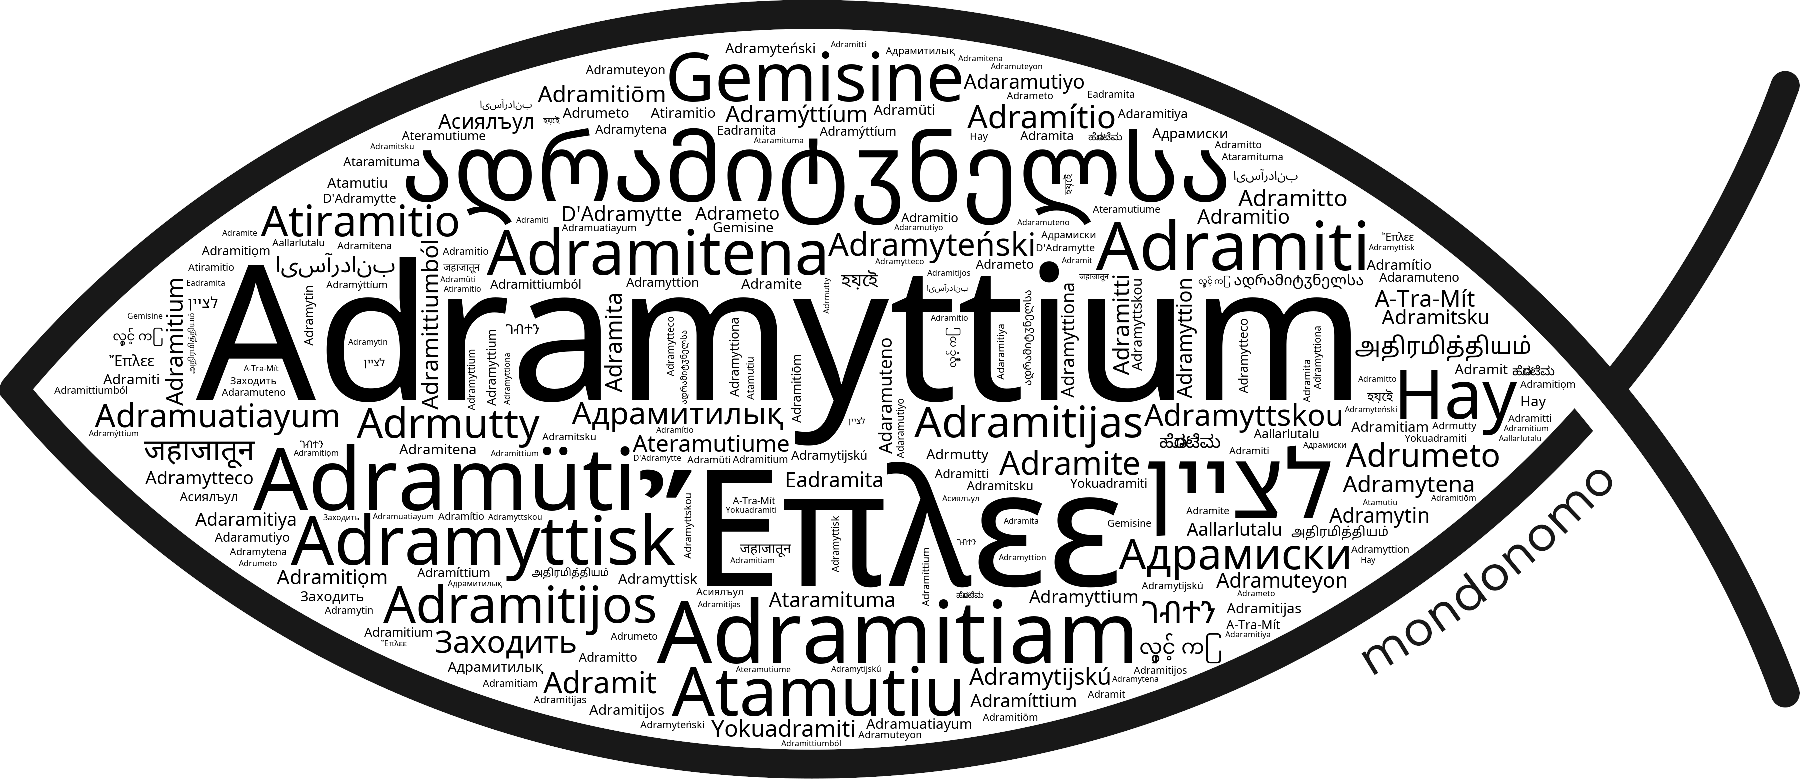 Name Adramyttium in the world's Bibles